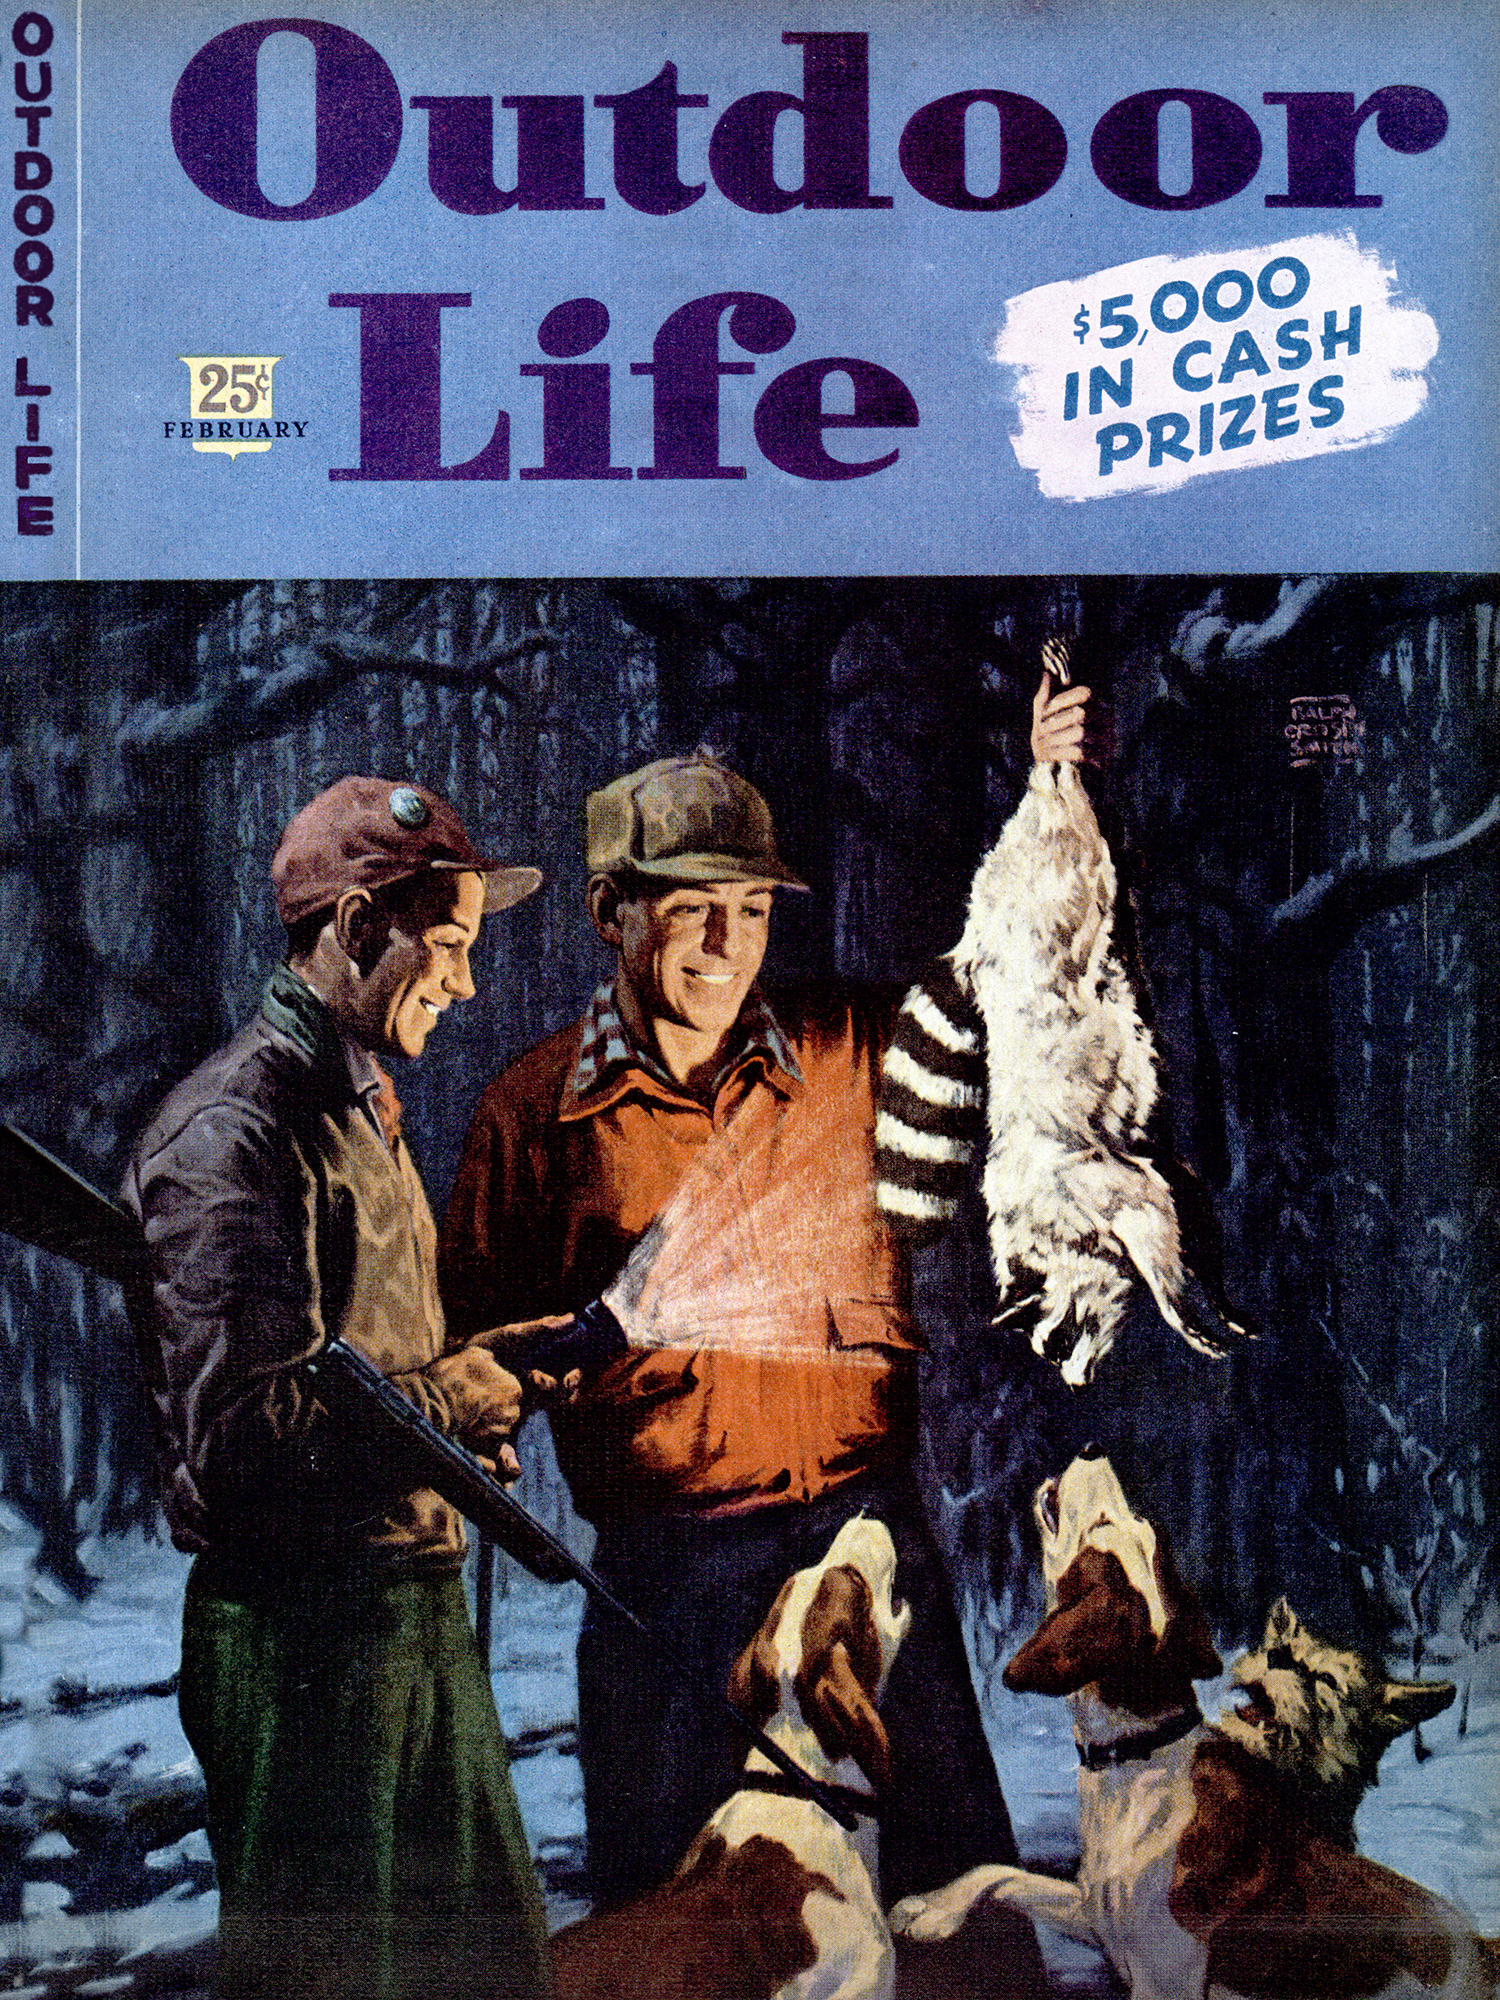 1946 magazine cover